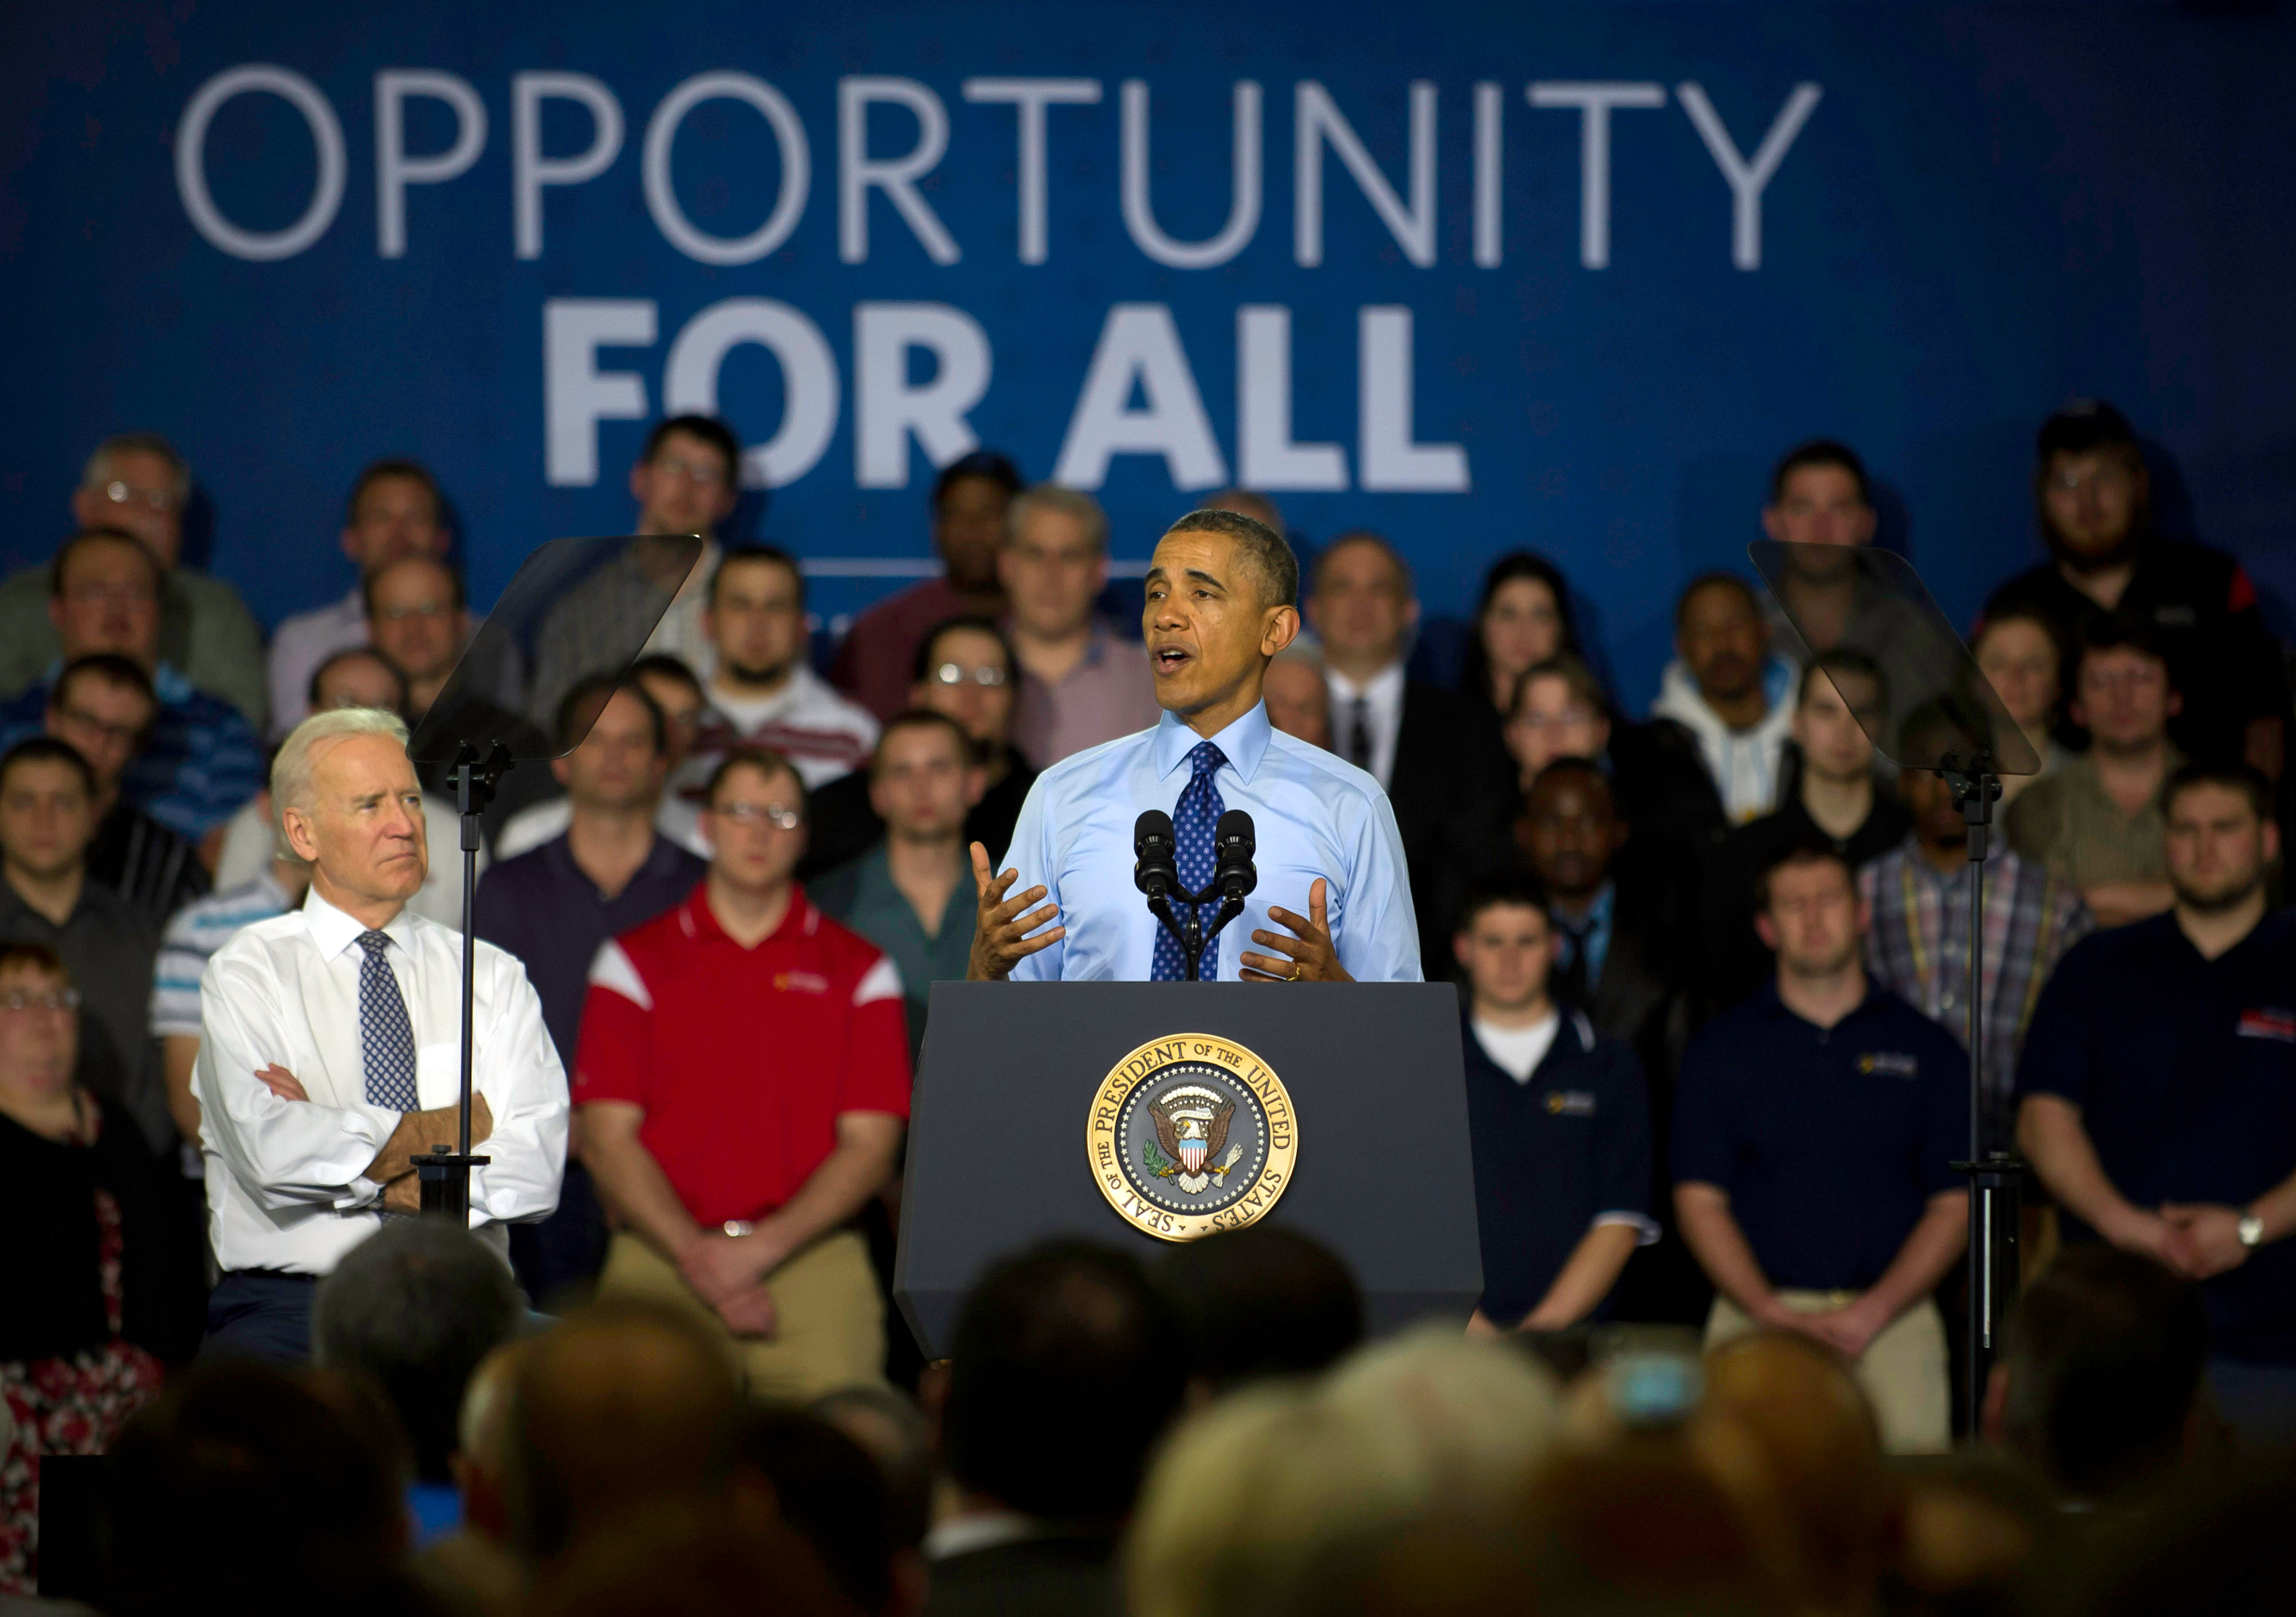 Obama And Biden Discuss Job Skills Training In Pennsylvania